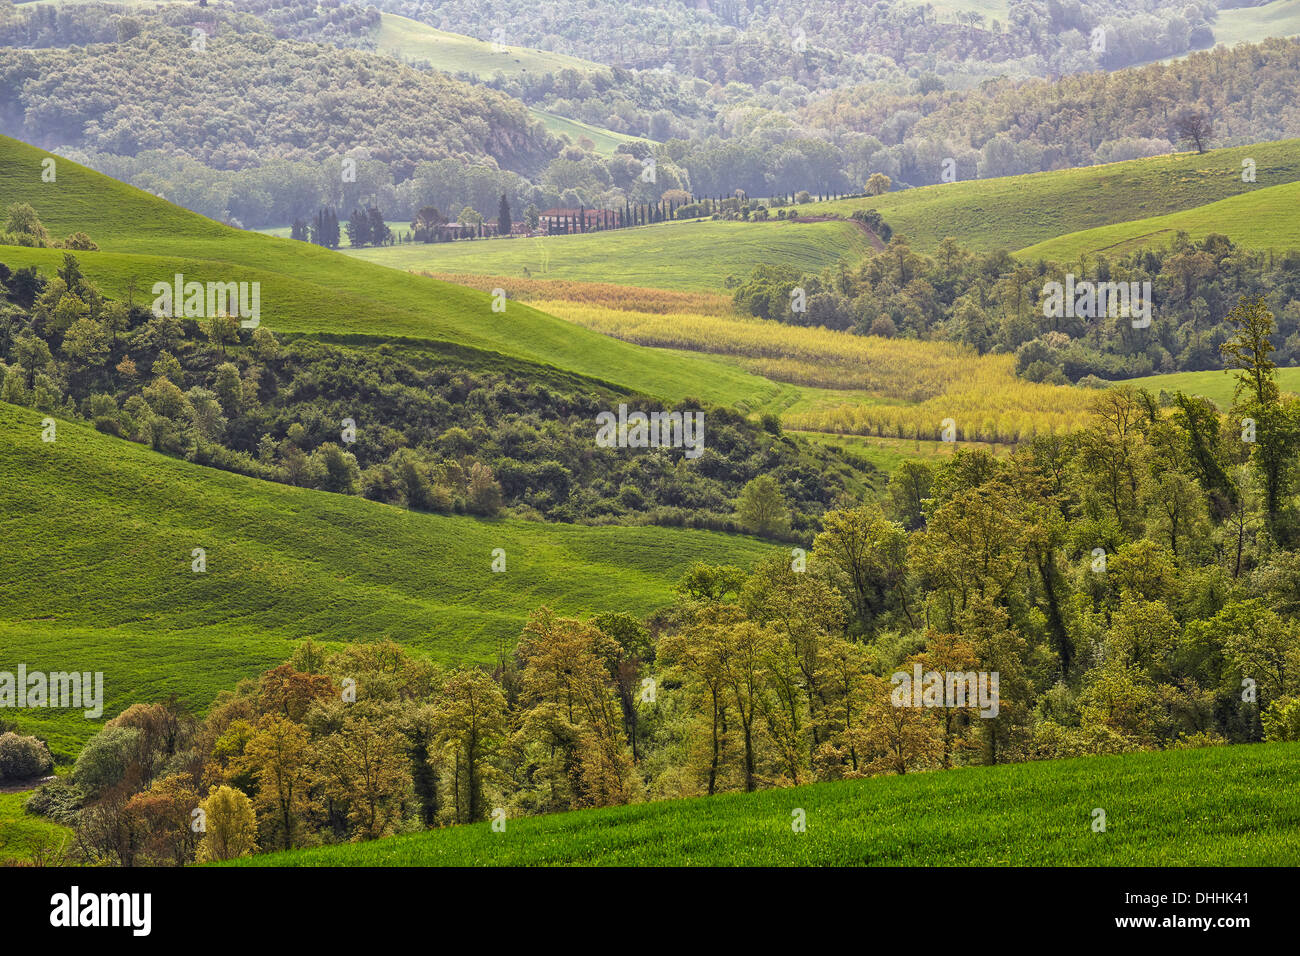 Hilly landscape of the Crete Senesi region, Rosennano, Province of Siena, Tuscany, Italy Stock Photo